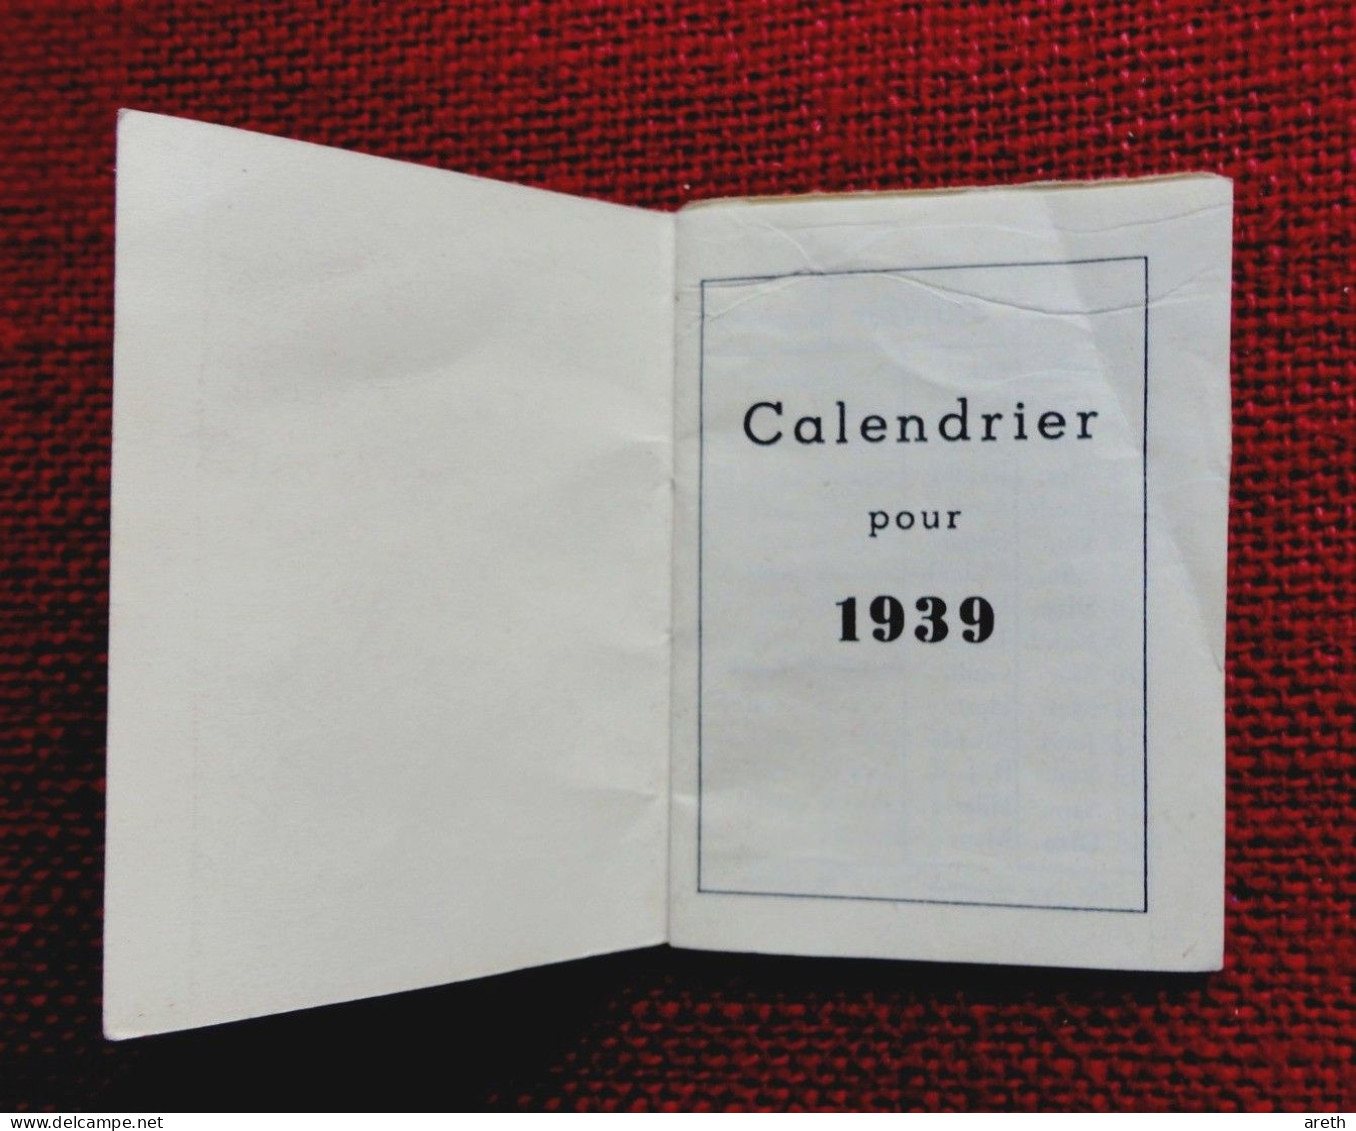 Petit Calendrier  De Poche 1939  - CAFÉ POGGI - Petit Format : 1921-40